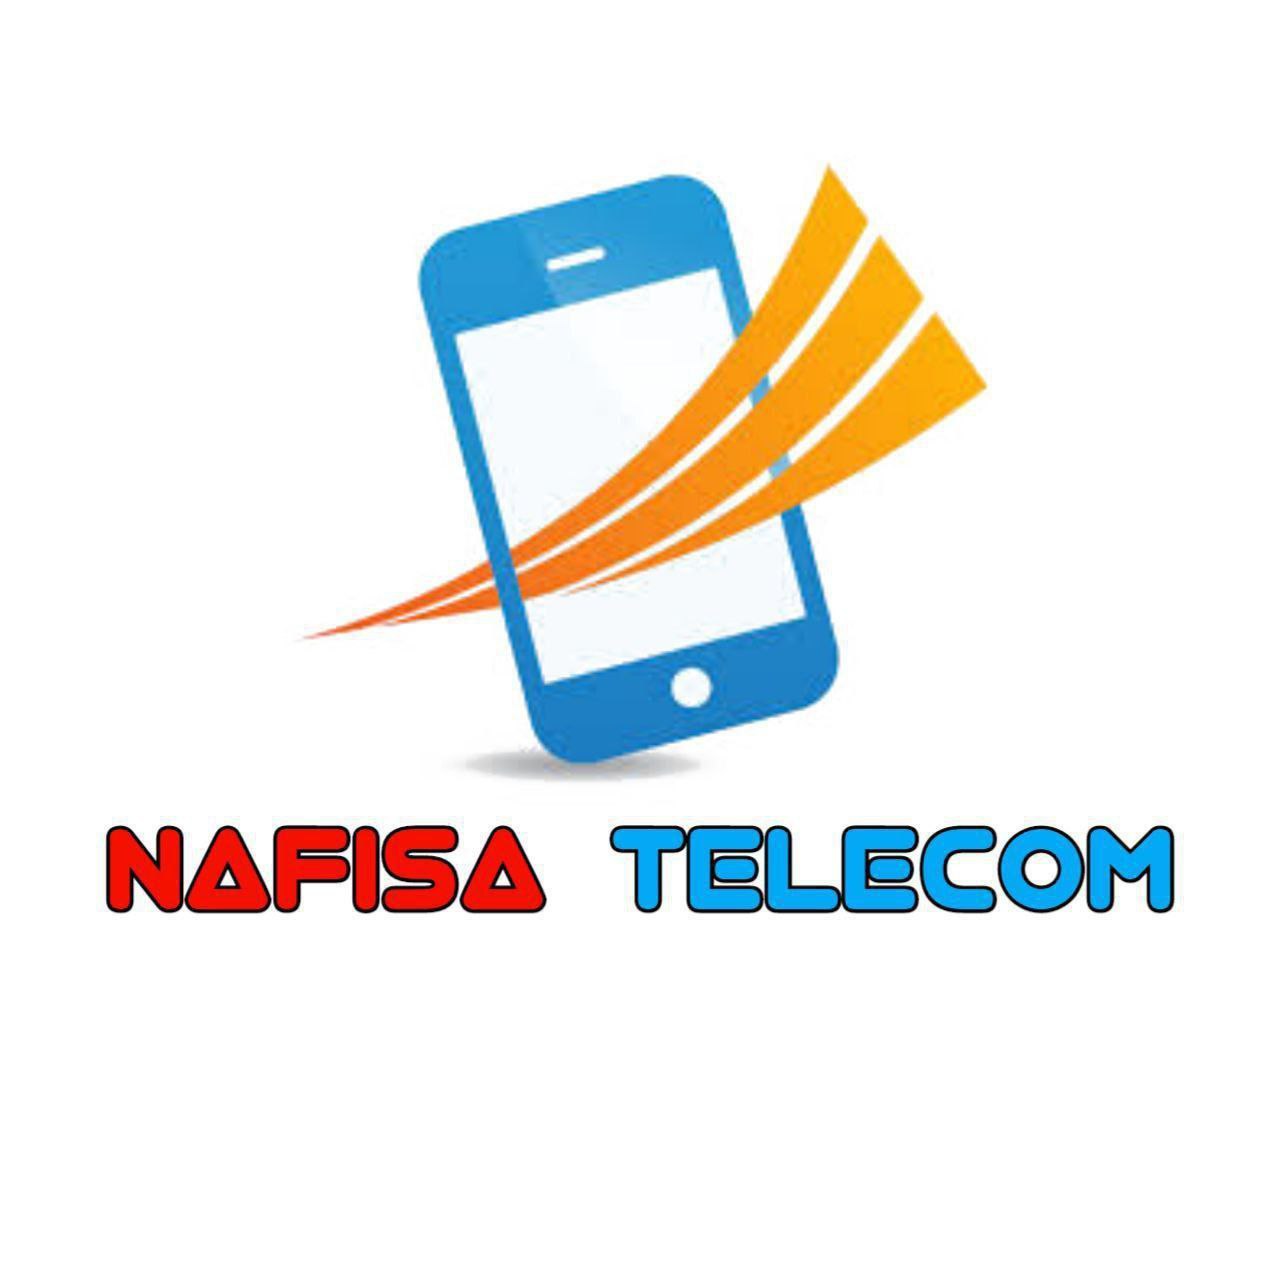 Nafisa Telecom